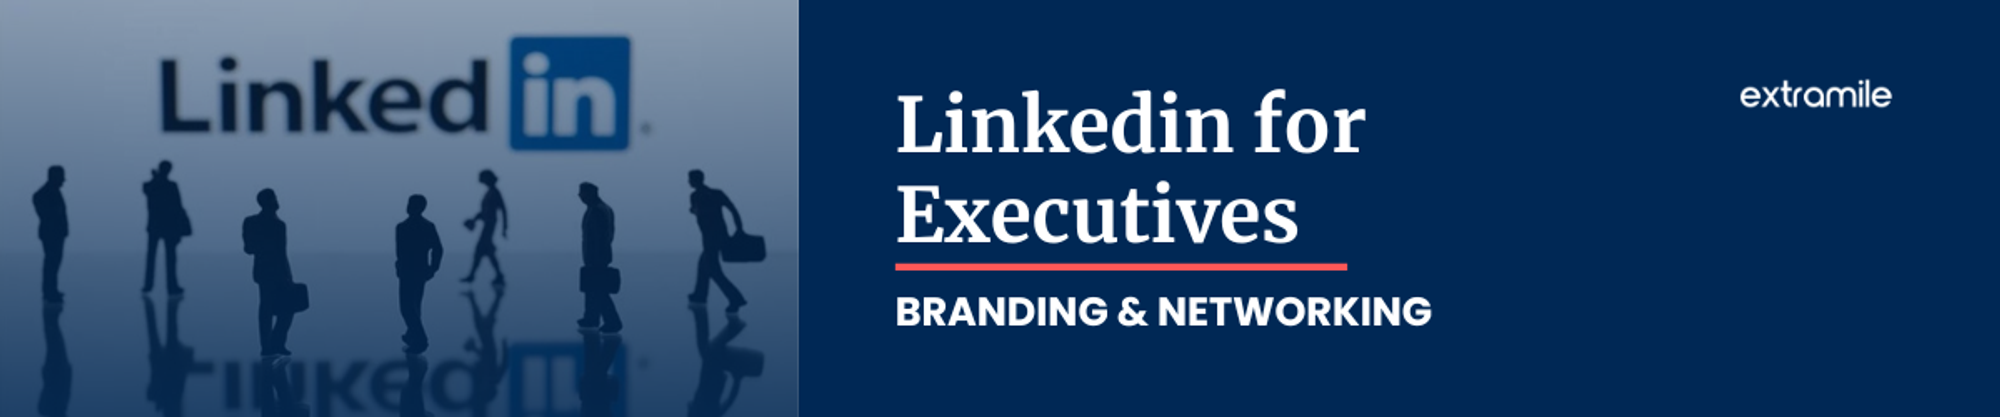 Linkedin for Executives: Branding & Networking